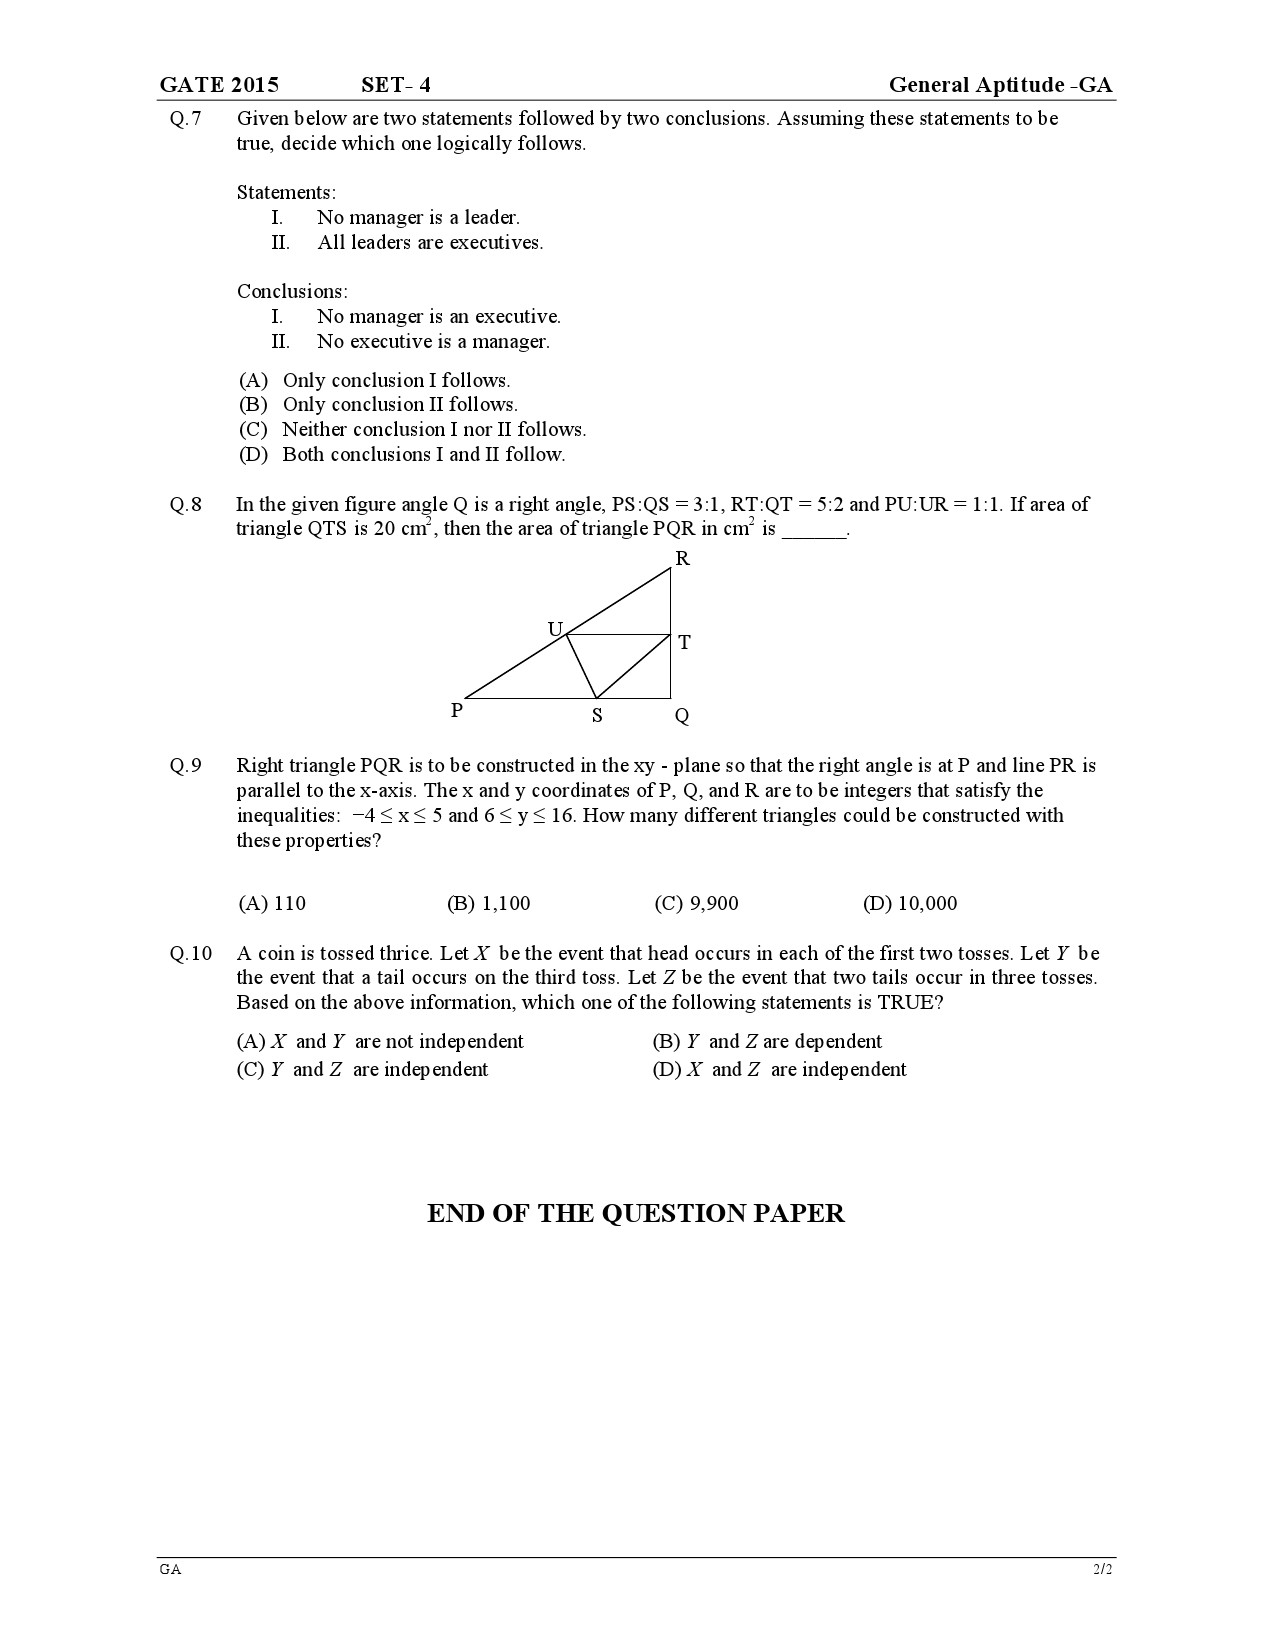 GATE Exam Question Paper 2015 General Aptitude 8